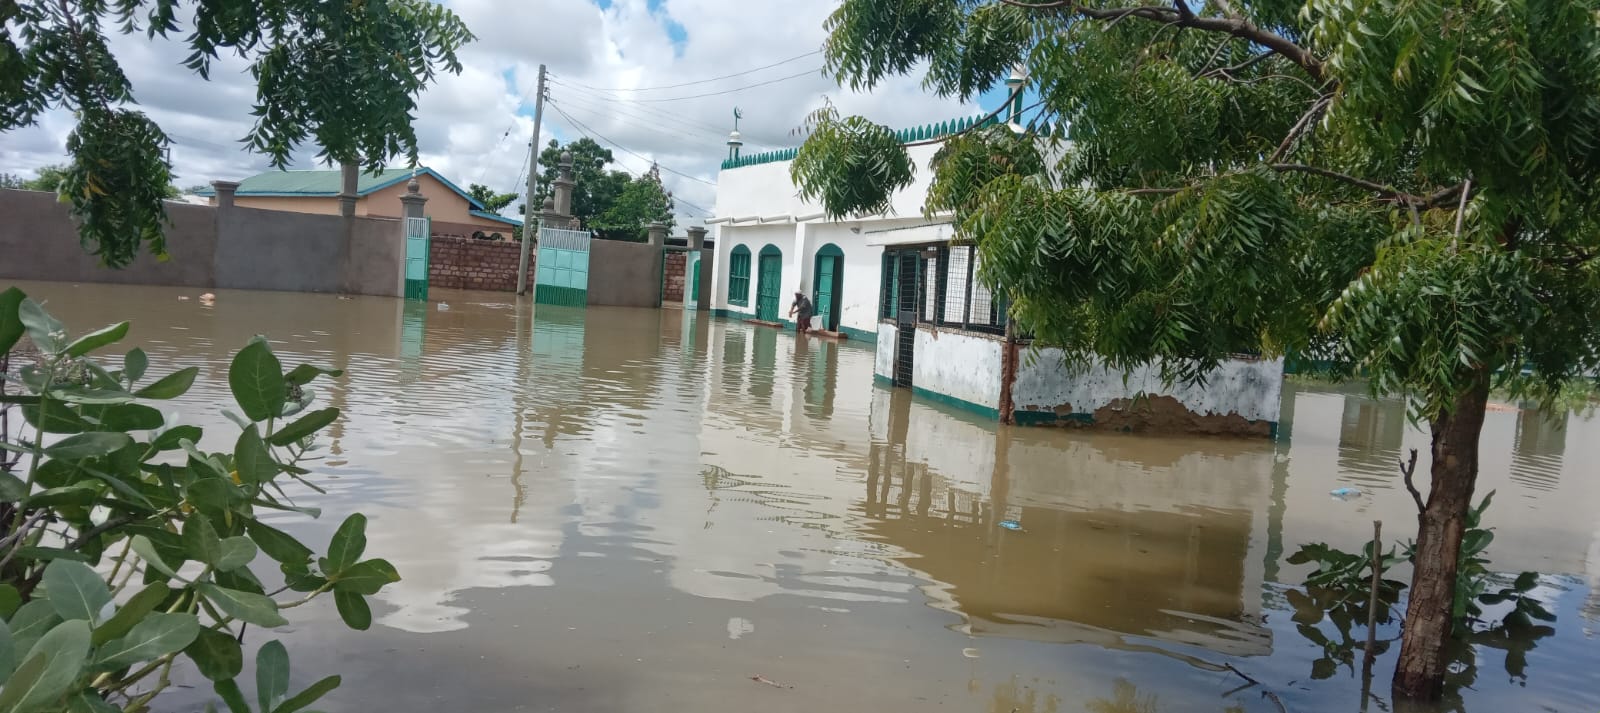 Heavy rains wreak havoc in Elwak, Mandera County, hundreds of residents displaced